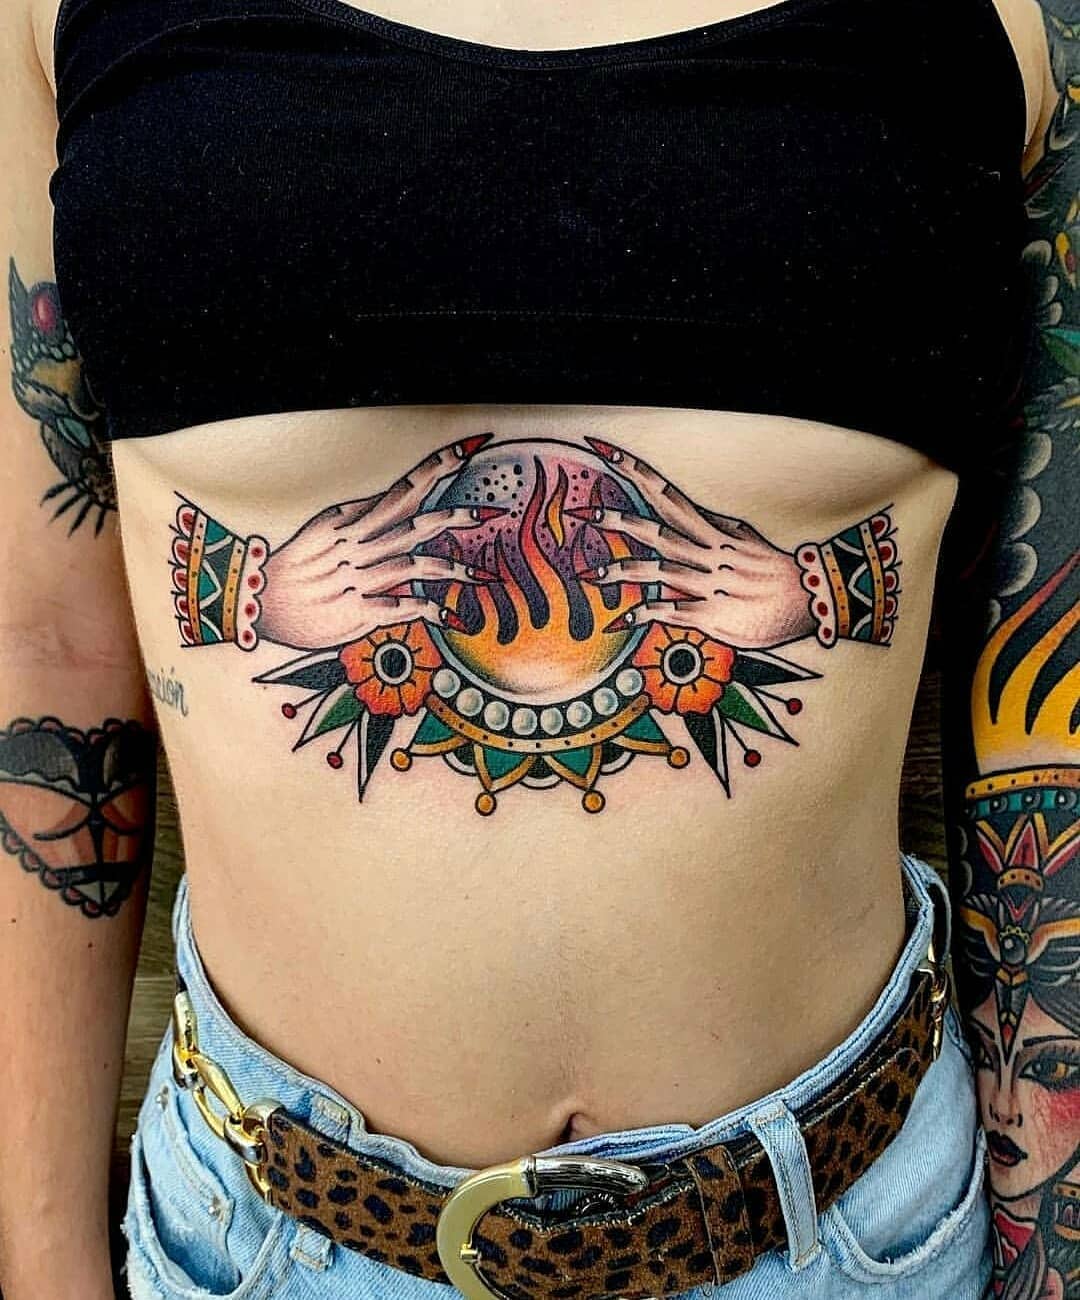 150 Stomach Tattoos That Will Help Make A Bold Style Statement - Wild Tattoo  Art